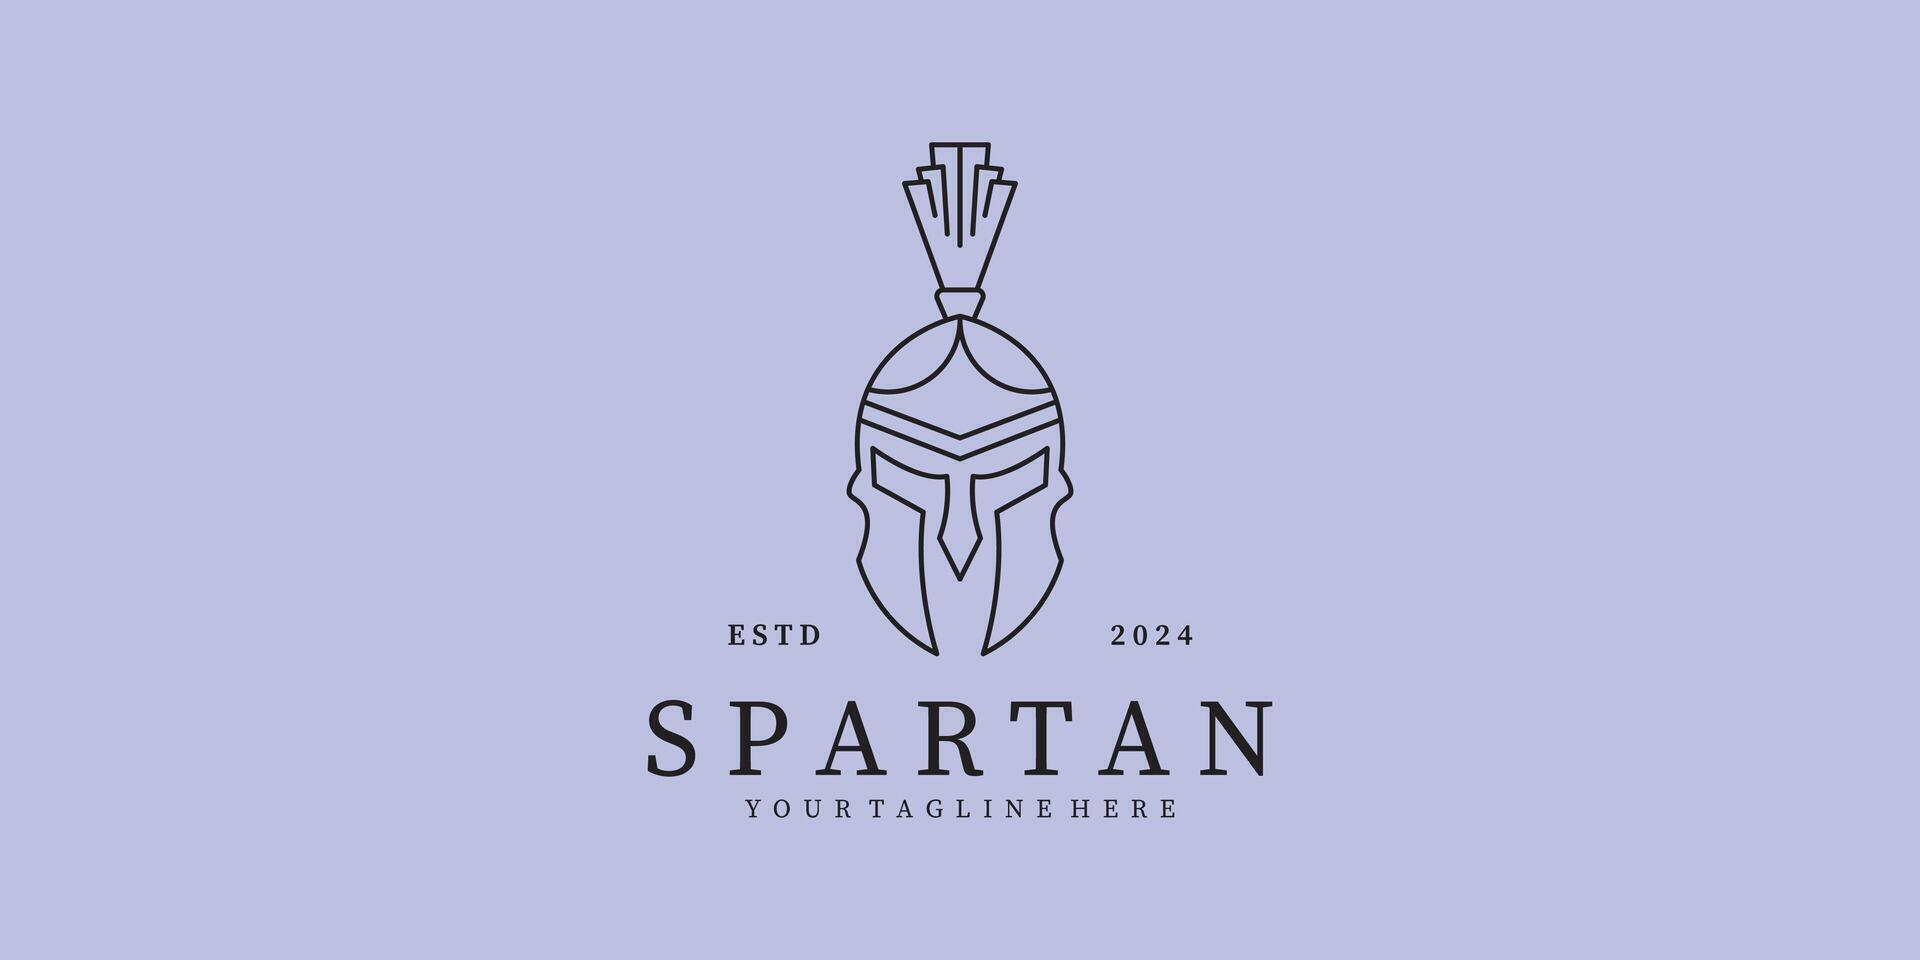 head spartan logo icon line art minimalist illustration design vector